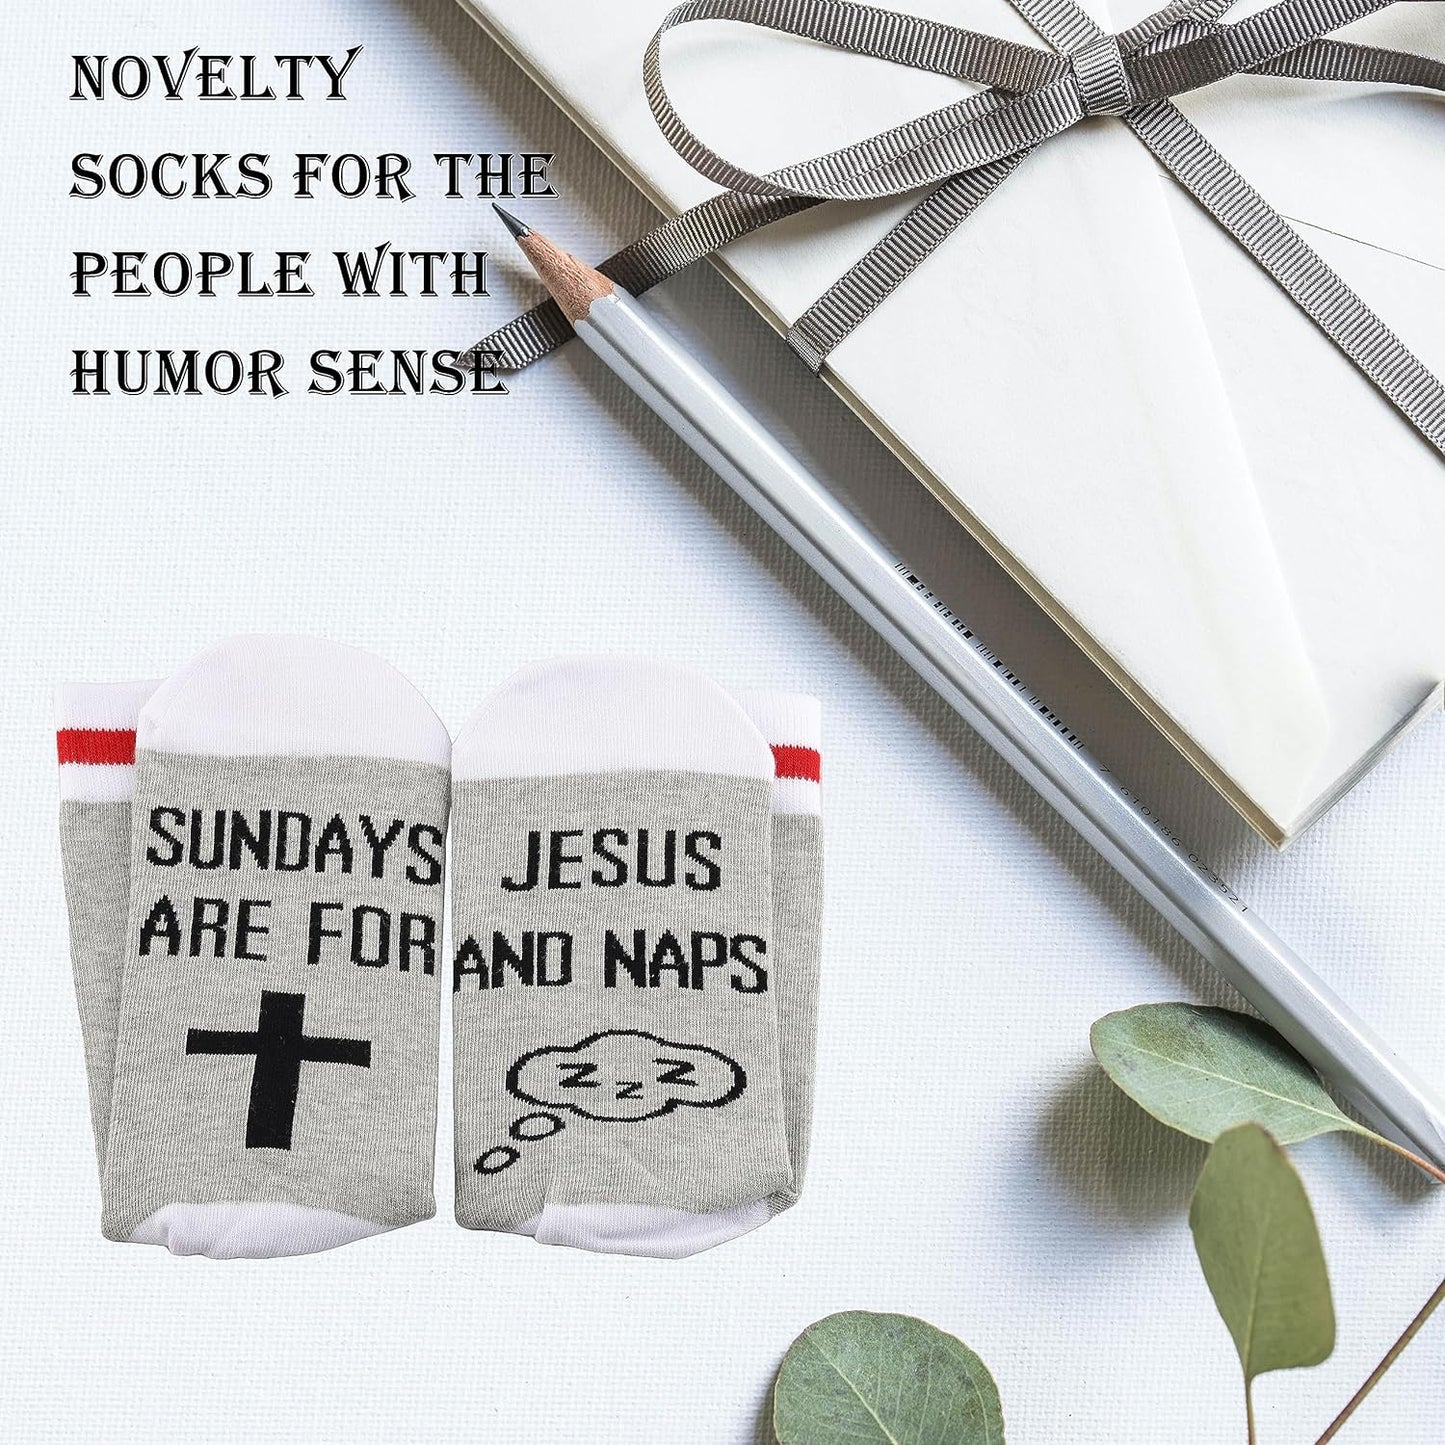 Sundays Are For Jesus And Naps Funny Christian Socks Christian Gift Idea claimedbygoddesigns